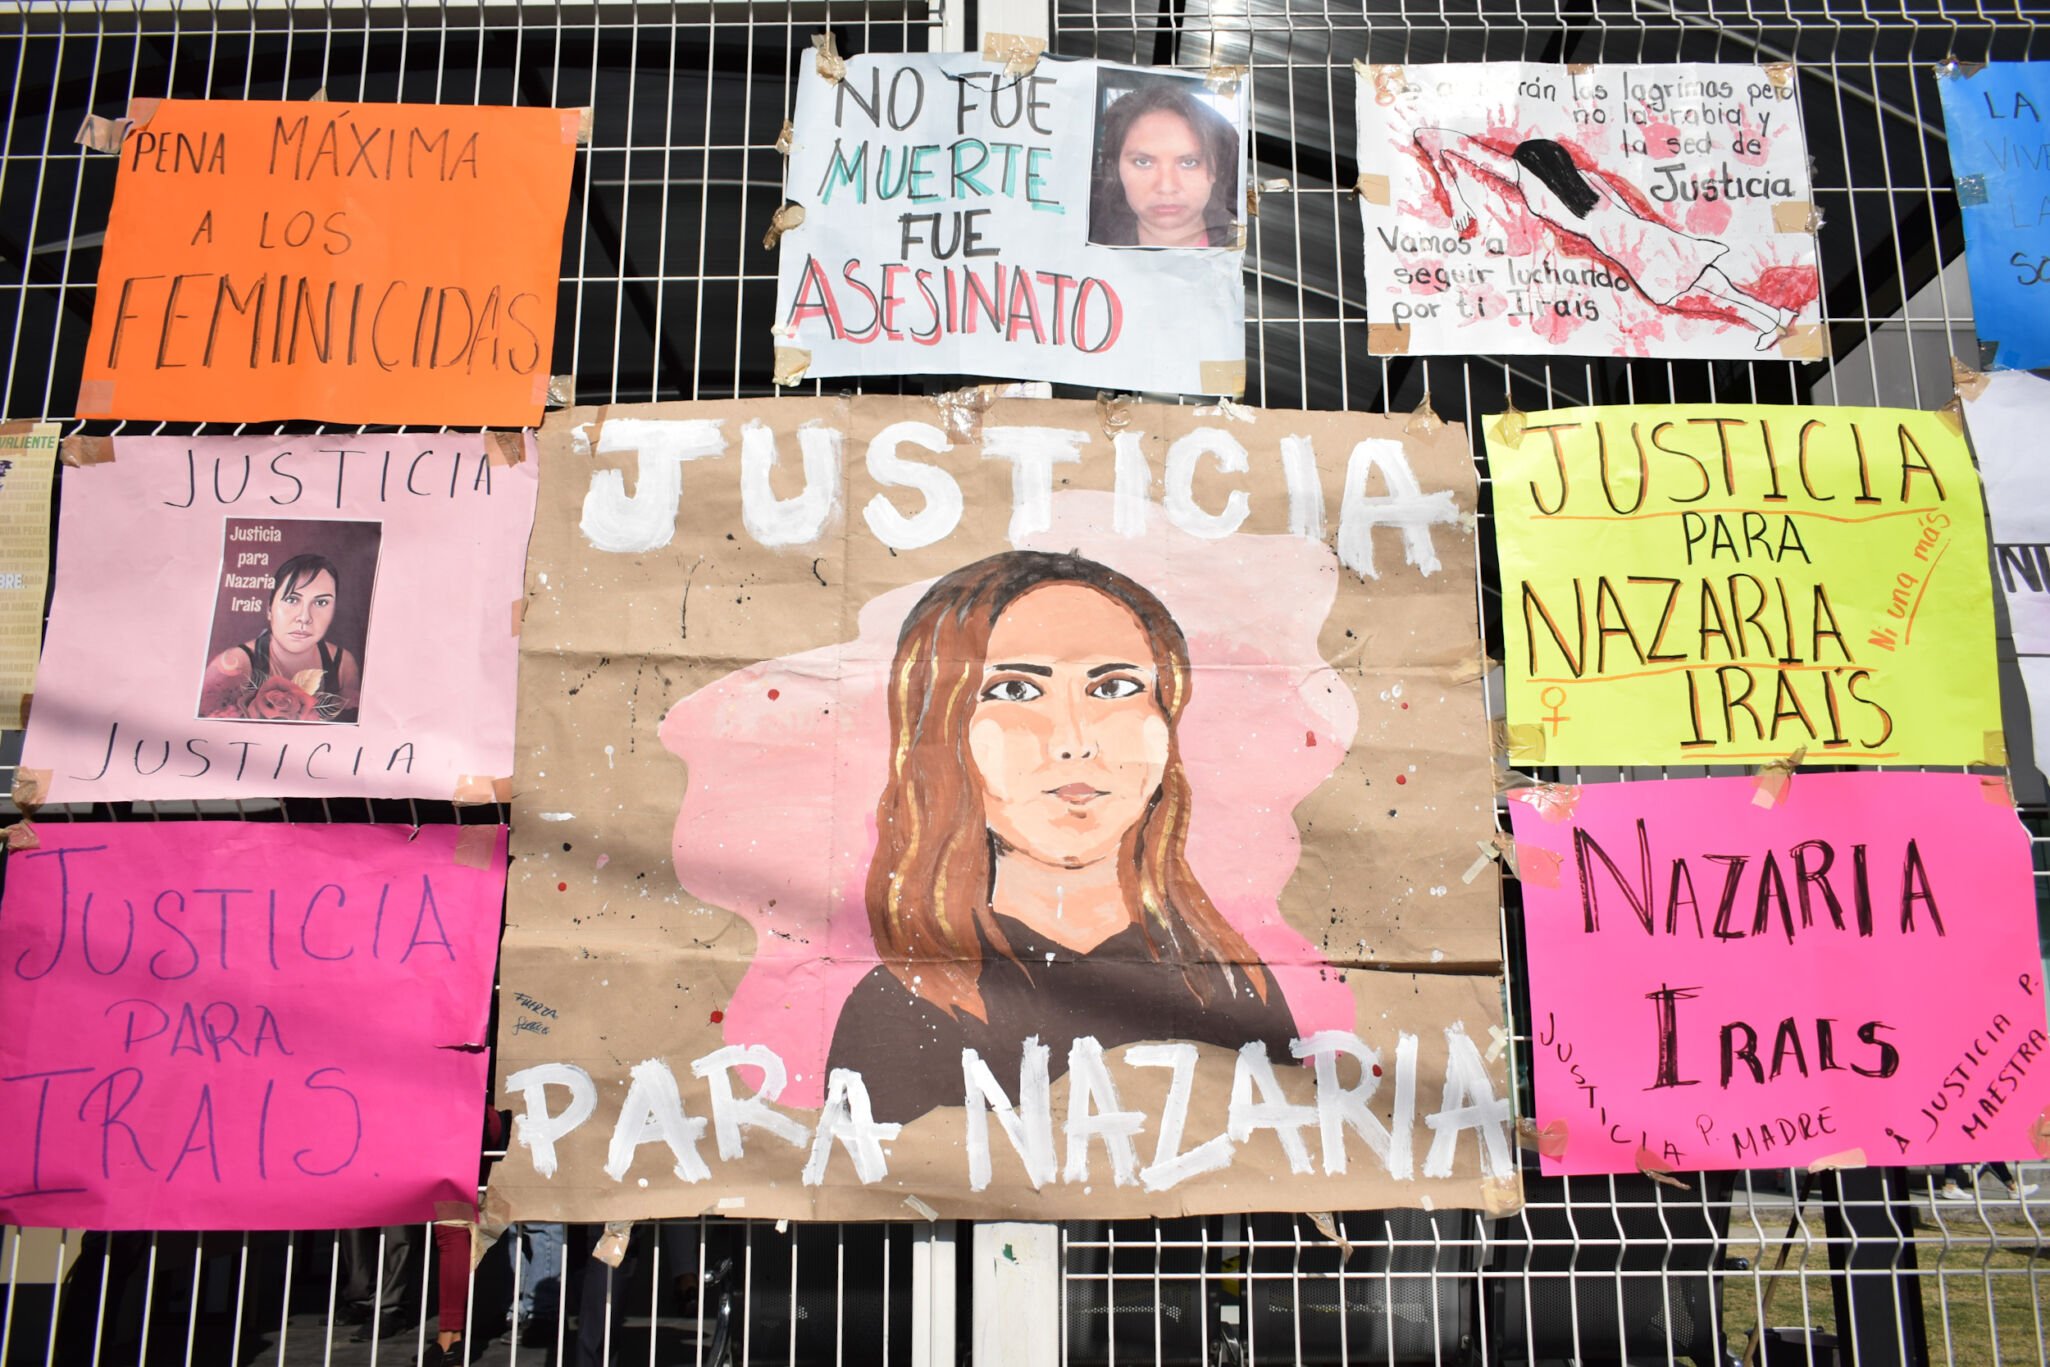 Dan 60 años de cárcel a feminicidas de Nazaria Iraís